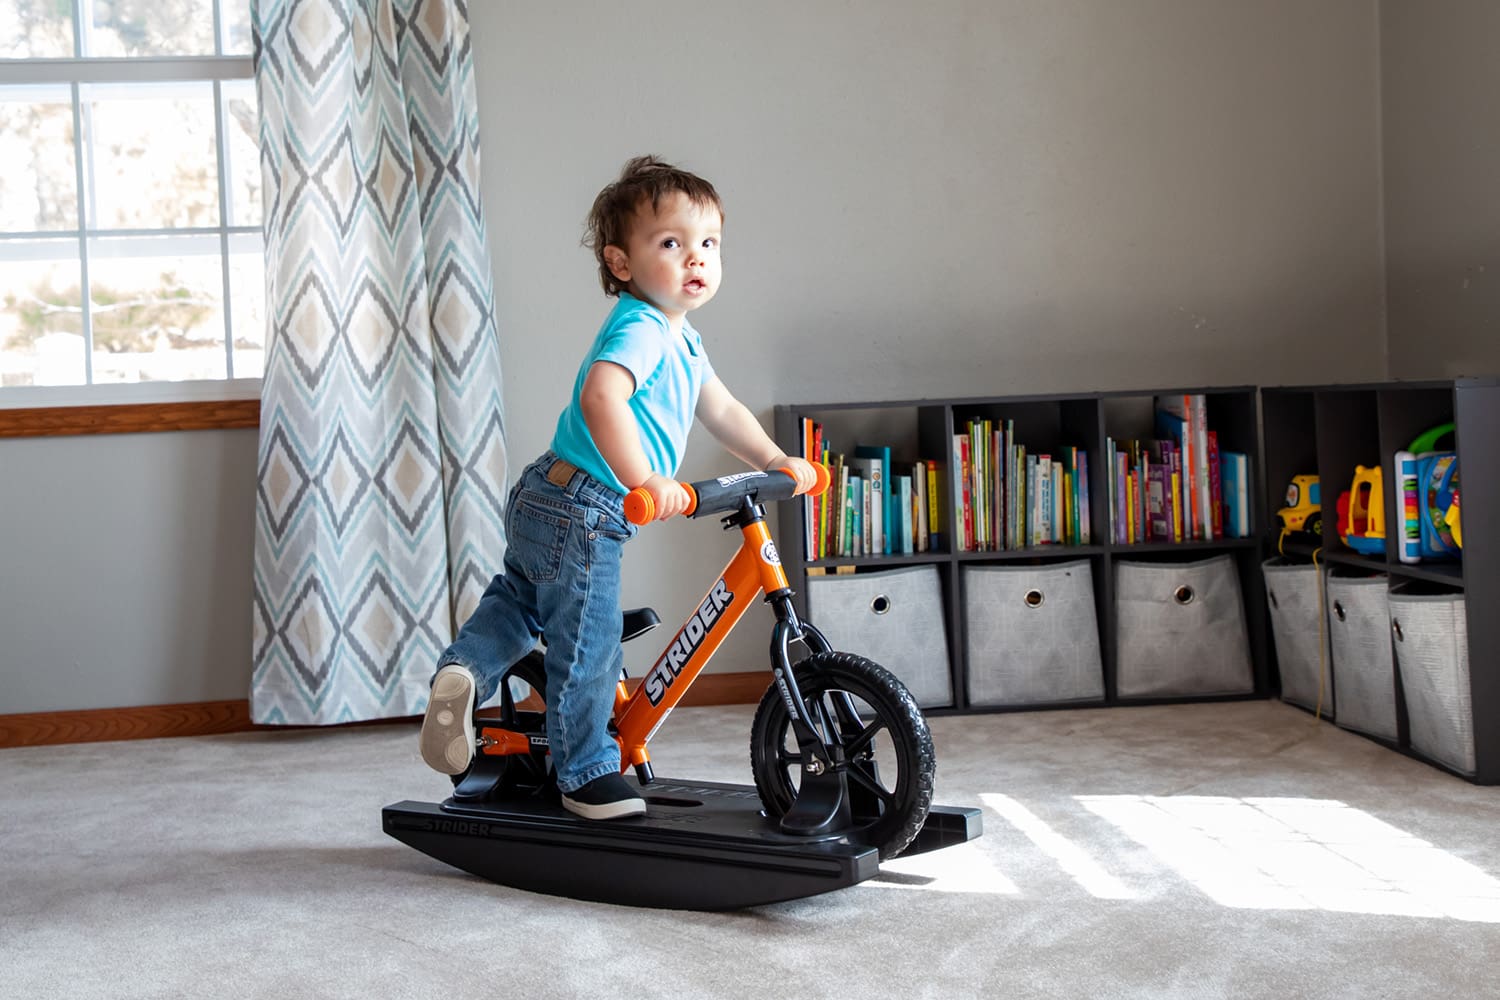 A toddler steps onto an orange Strider Rocking Bike